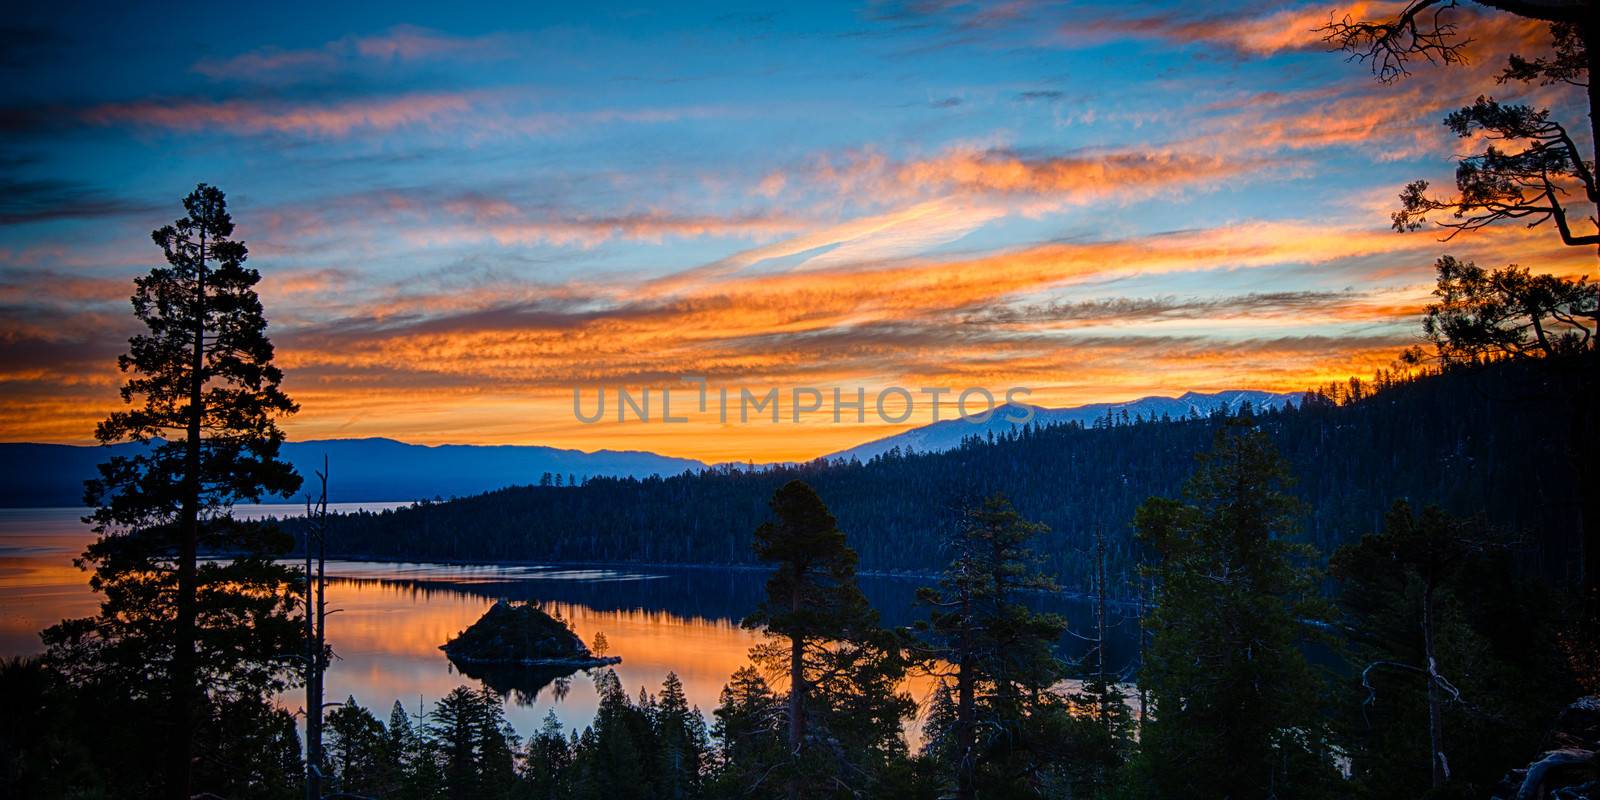 Reflection of clouds in a lake, Lake Tahoe, Sierra Nevada, California, USA